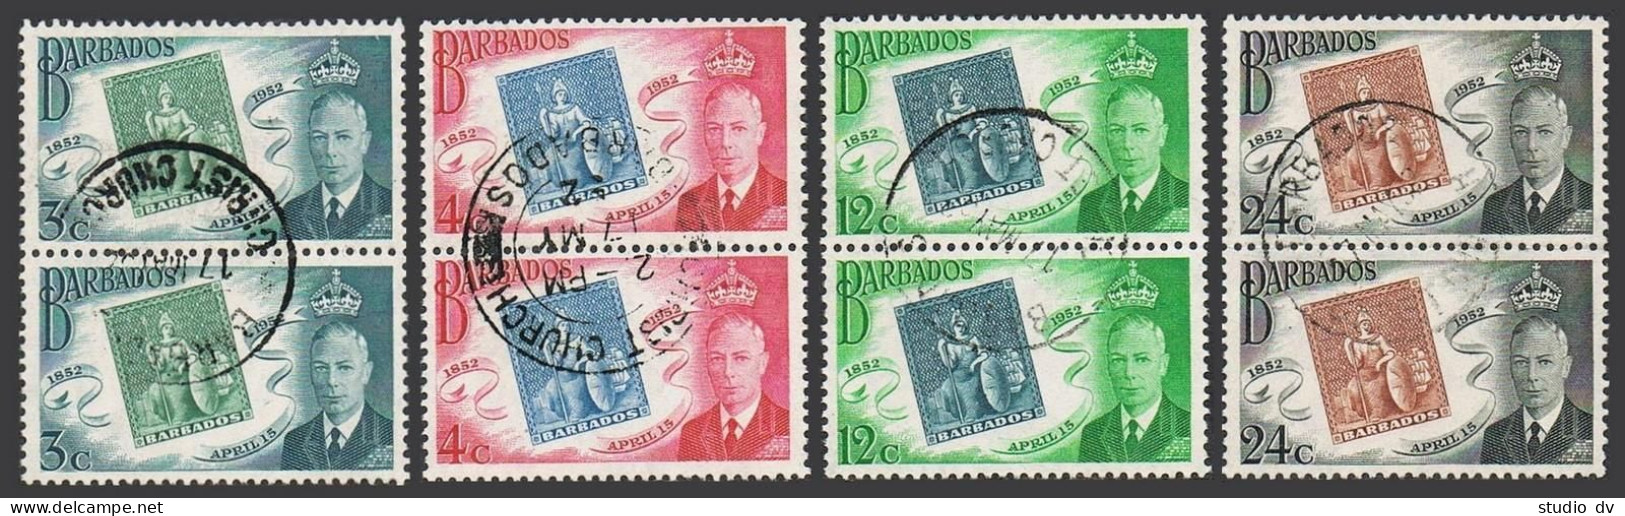 Barbados 230-233 Pairs, Used. Michel 198-201. Barbados Postage Stamps-100, 1952. - Barbados (1966-...)